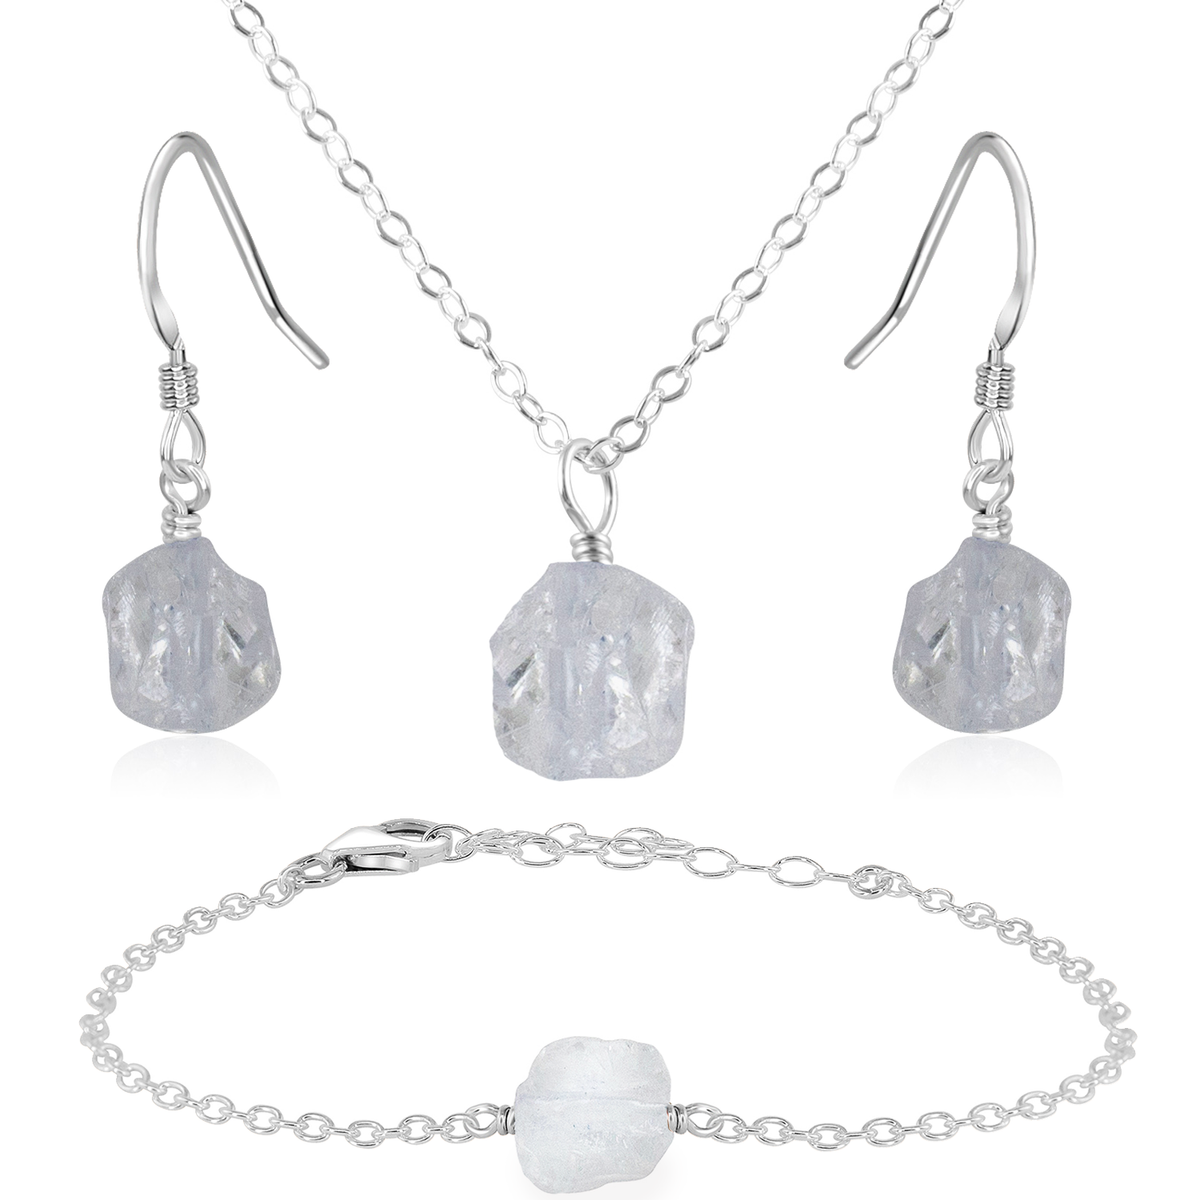 Raw Crystal Quartz Jewellery Set - Raw Crystal Quartz Jewellery Set - Sterling Silver / Cable / Necklace & Earrings & Bracelet - Luna Tide Handmade Crystal Jewellery